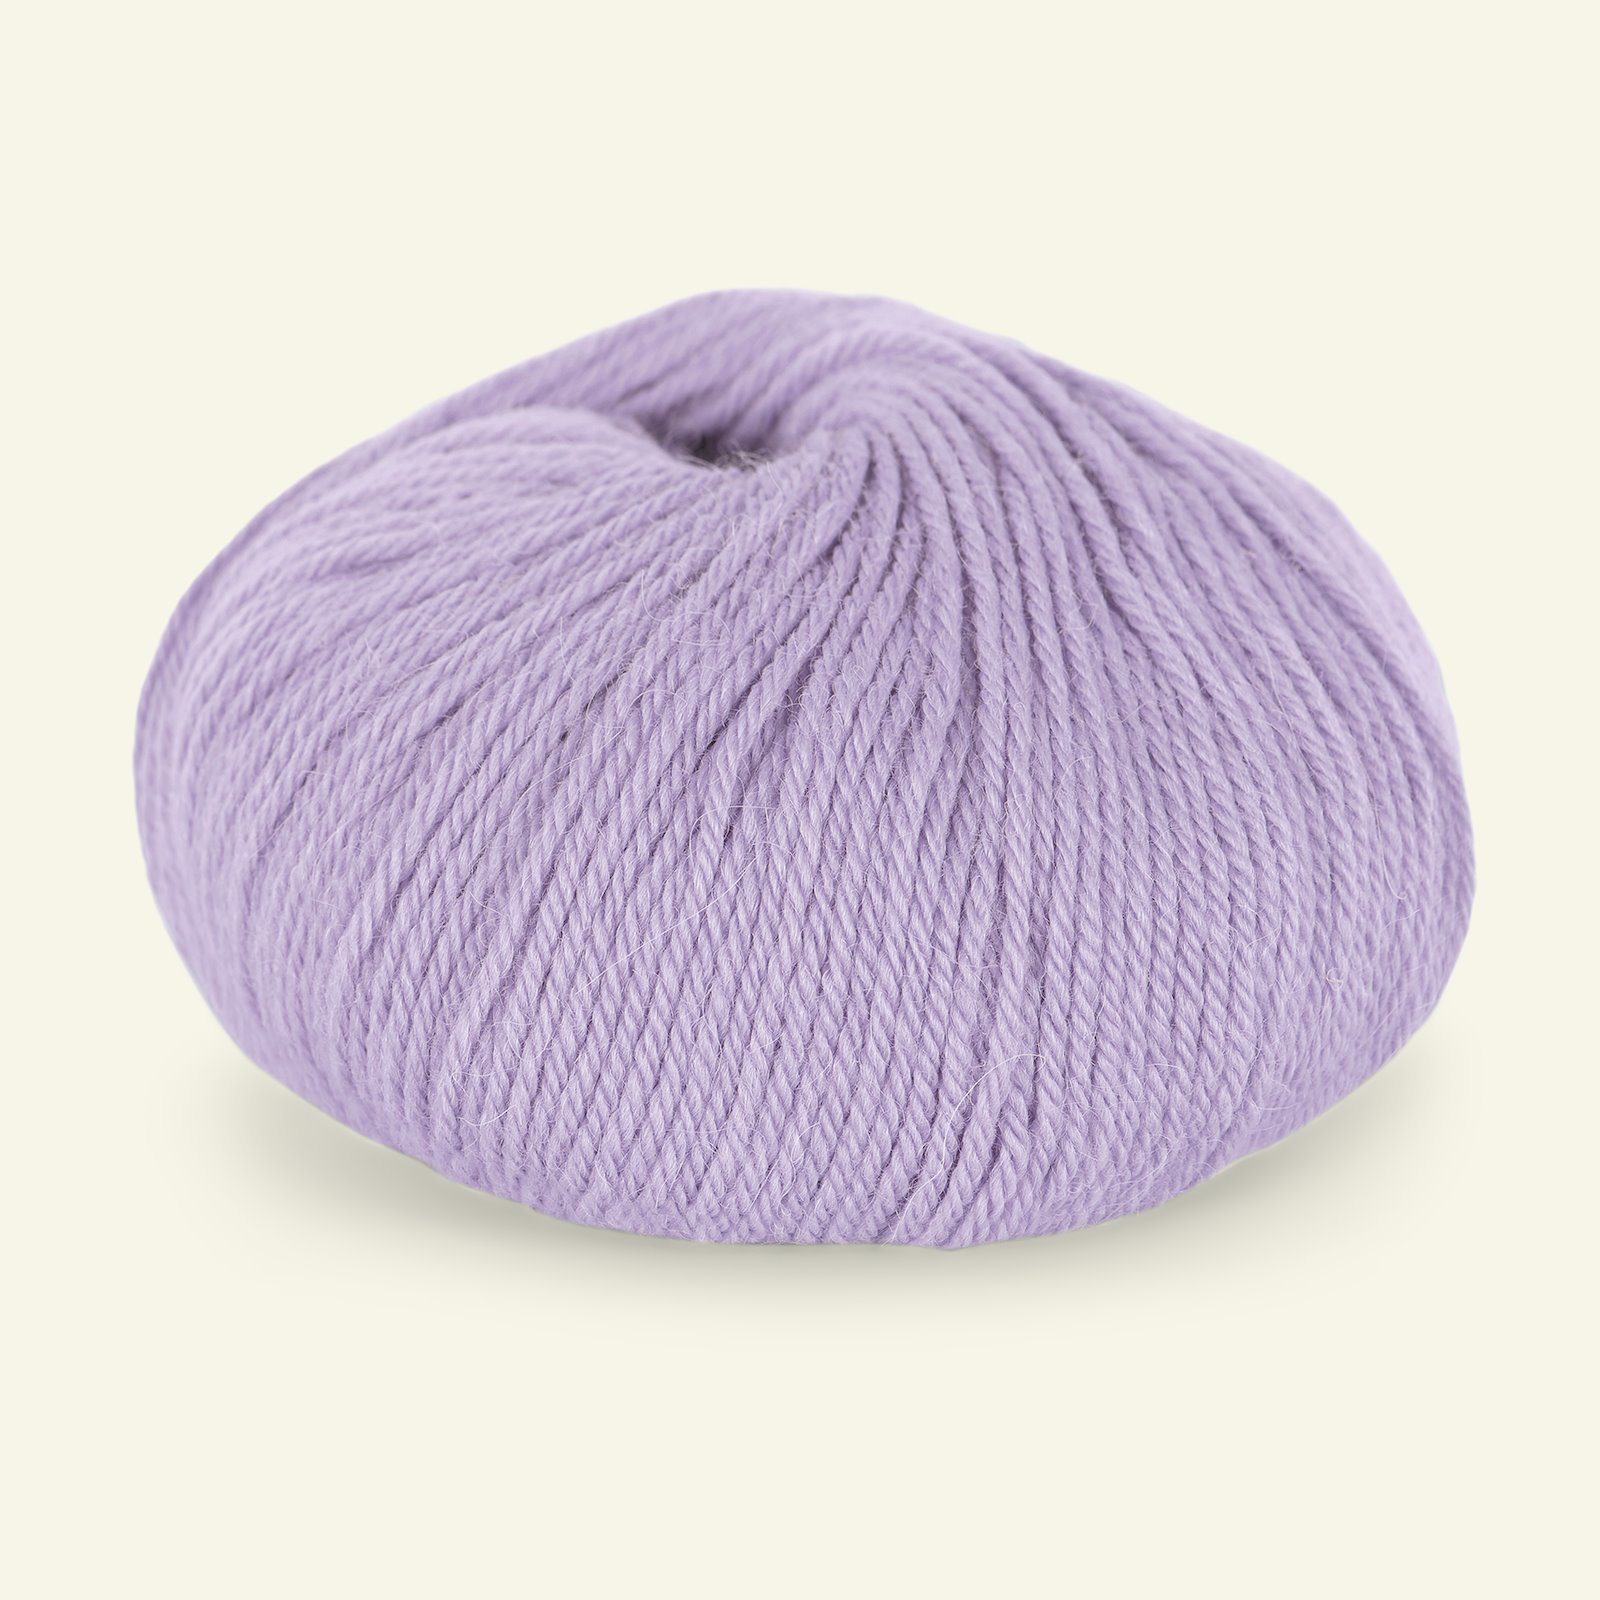 Du Store Alpakka, alpaca merino mixed yarn "Sterk", light lavender (912) 90000704_pack_b